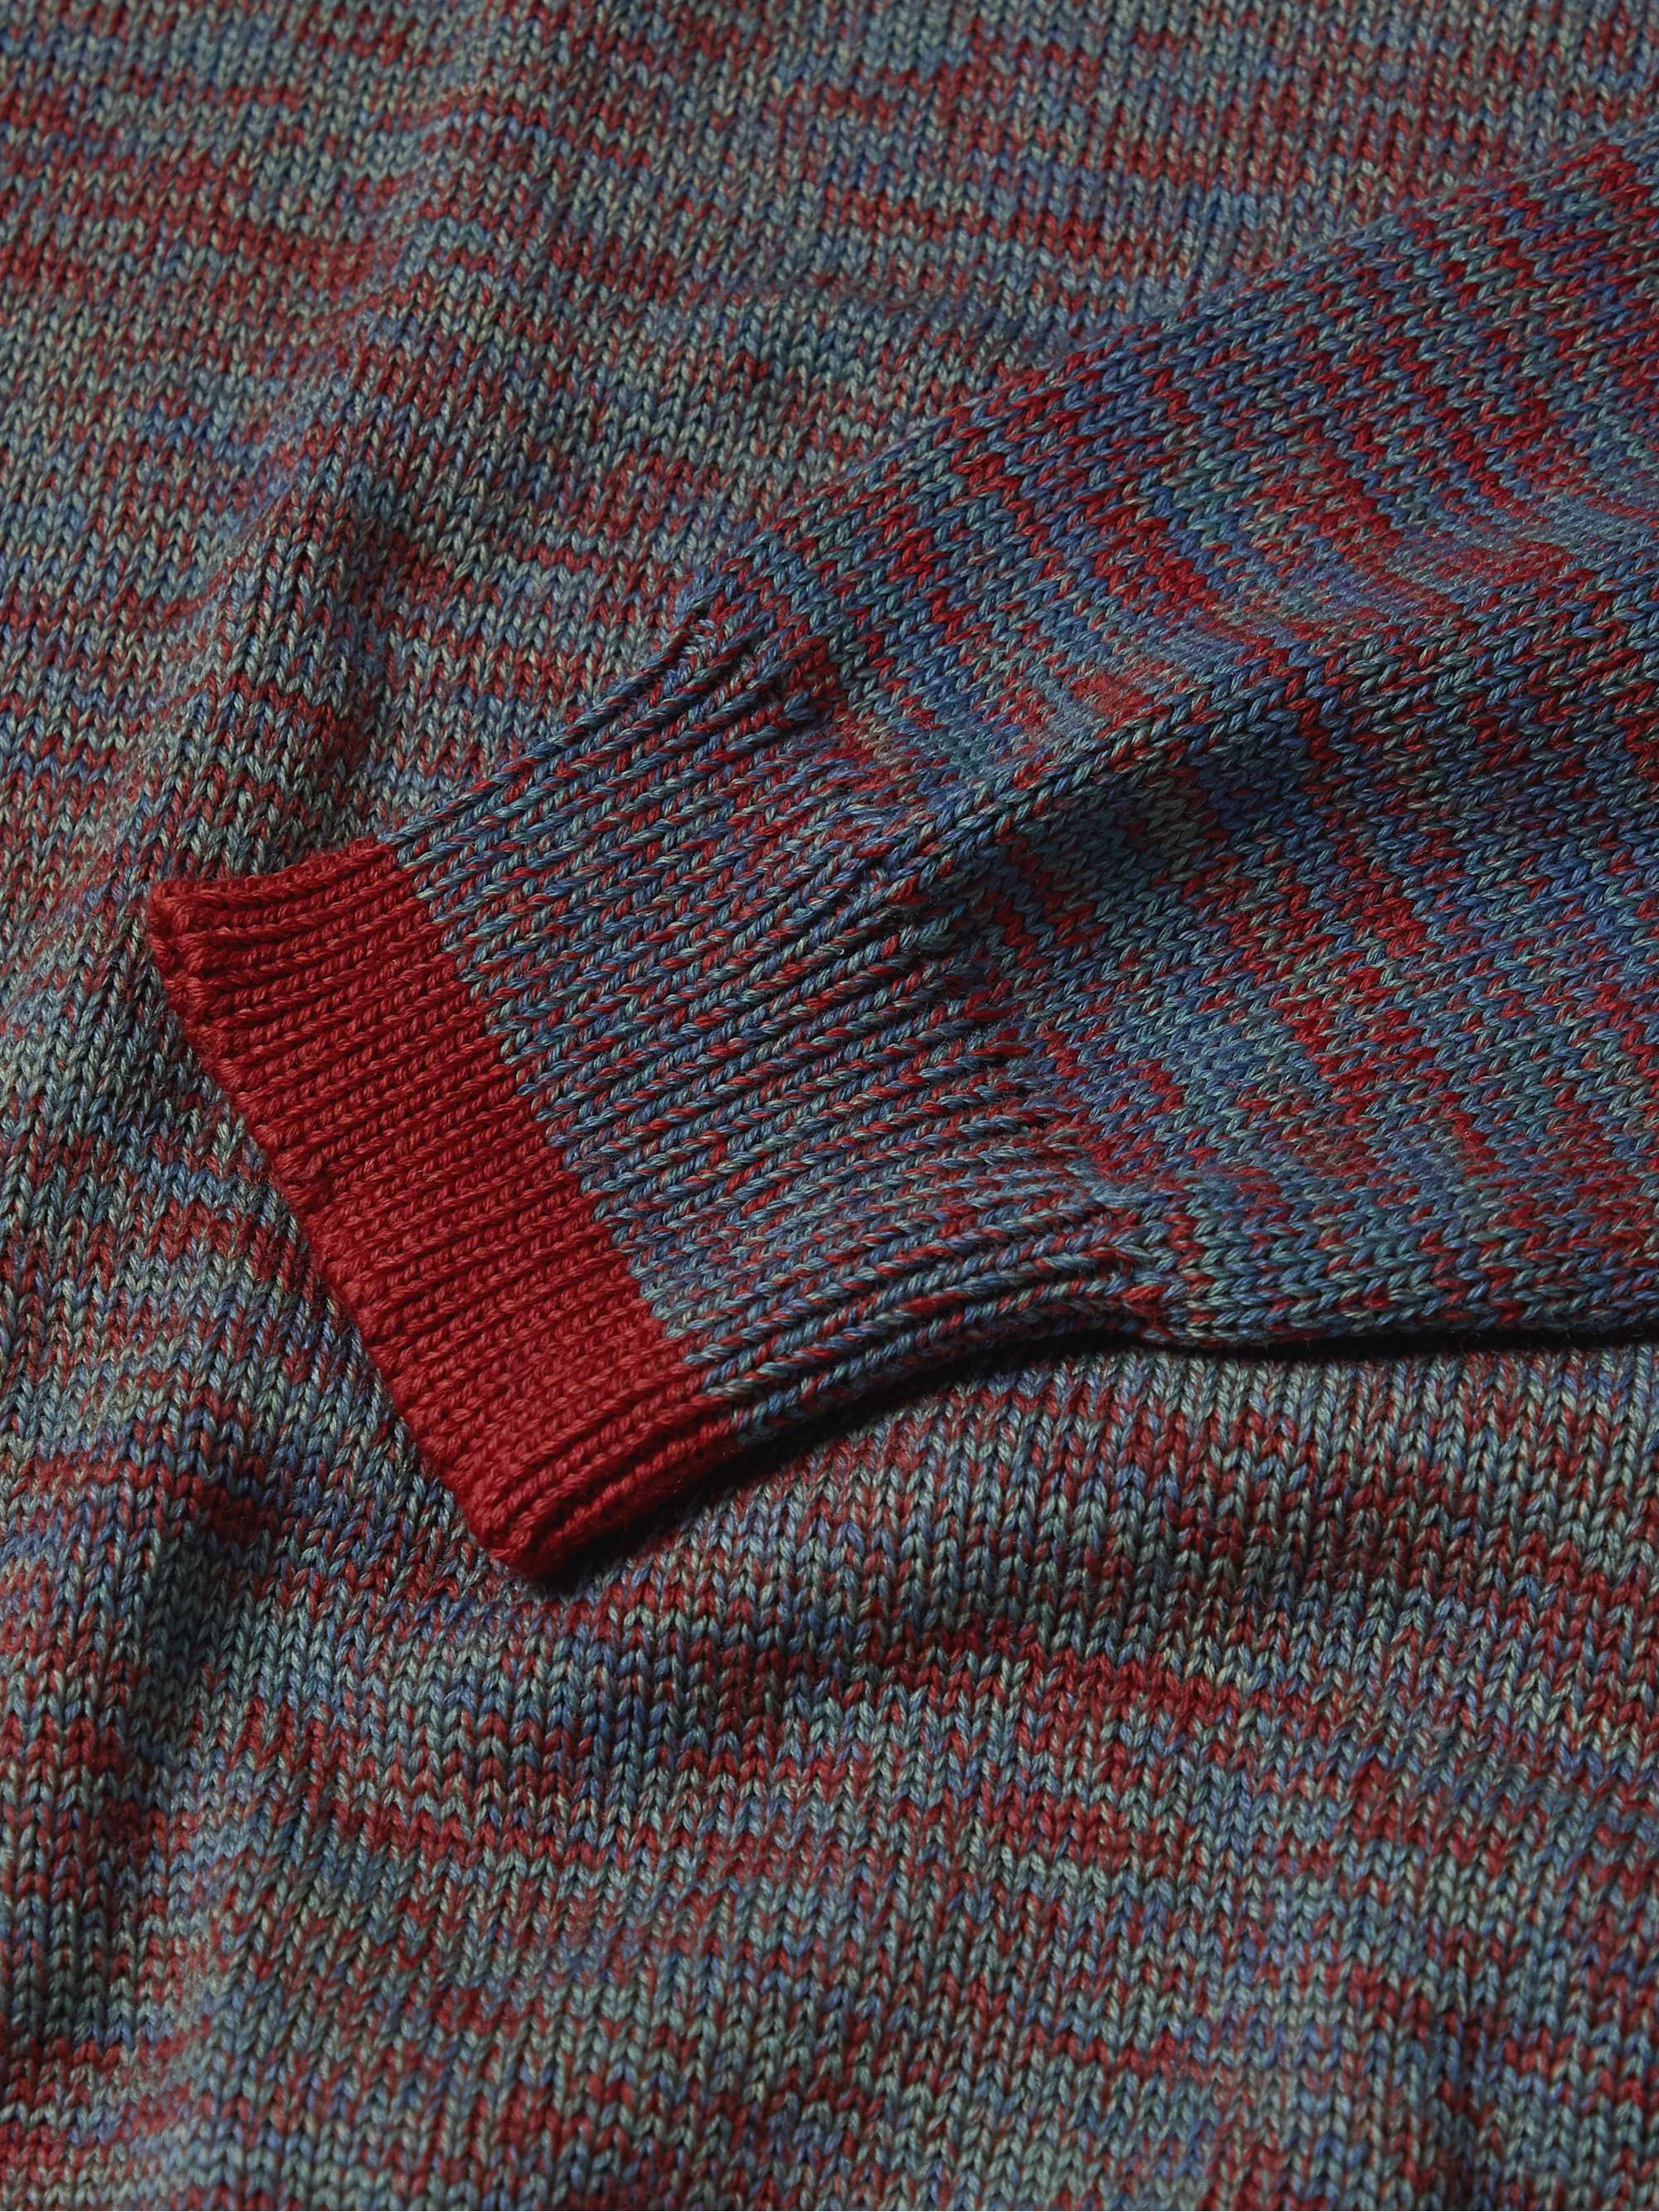 11.11/ELEVEN ELEVEN Merino Wool Sweater